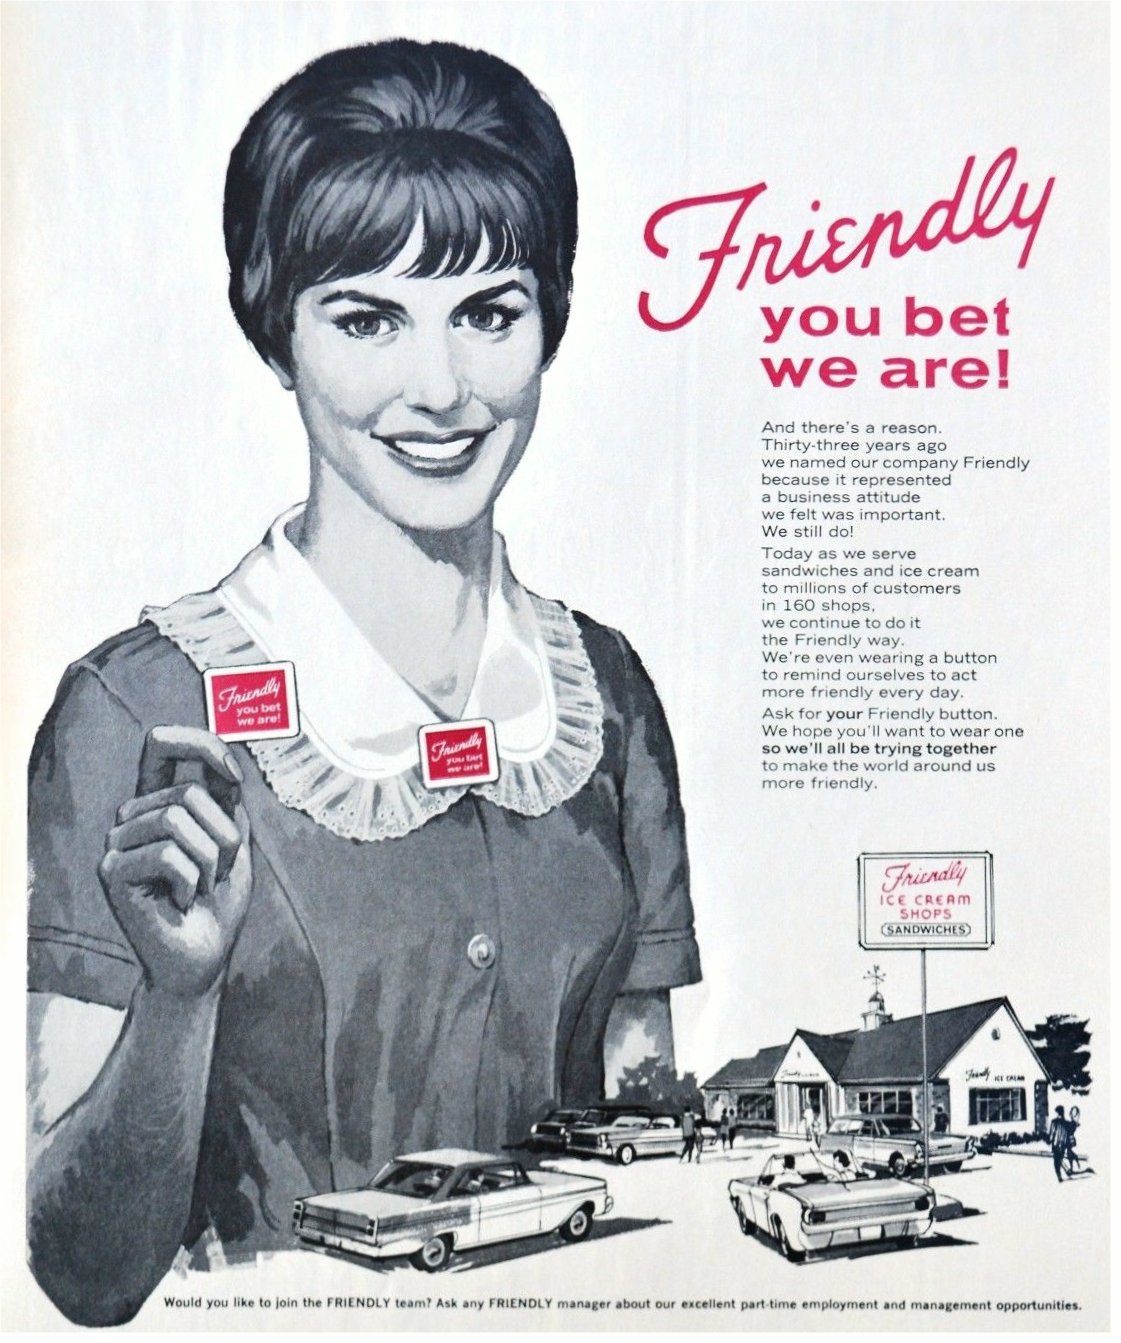 Friendly Ice Cream Shops - 1966